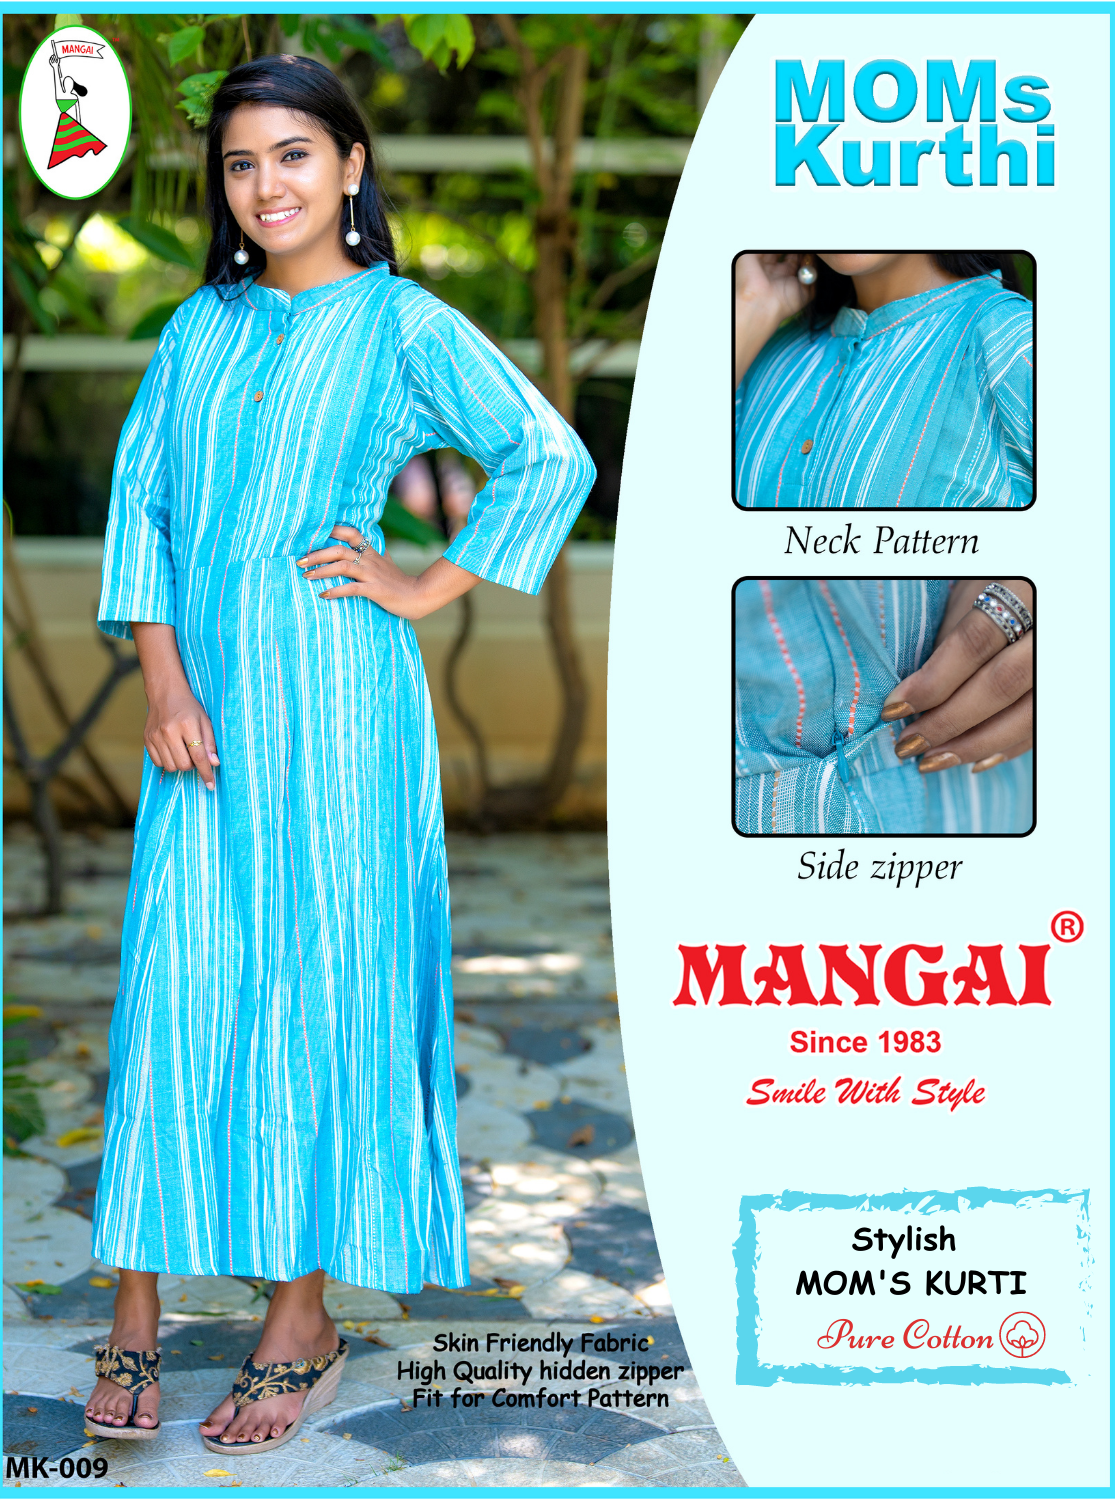 MANGAI New Premium Cotton Printed MOM'S KURTI - Umbrella Cut Stylish Mom's Kurti for Stylish Mom's | Feeding | Maternity | Casual Wear MOM'S KURTI | Latest Collection's